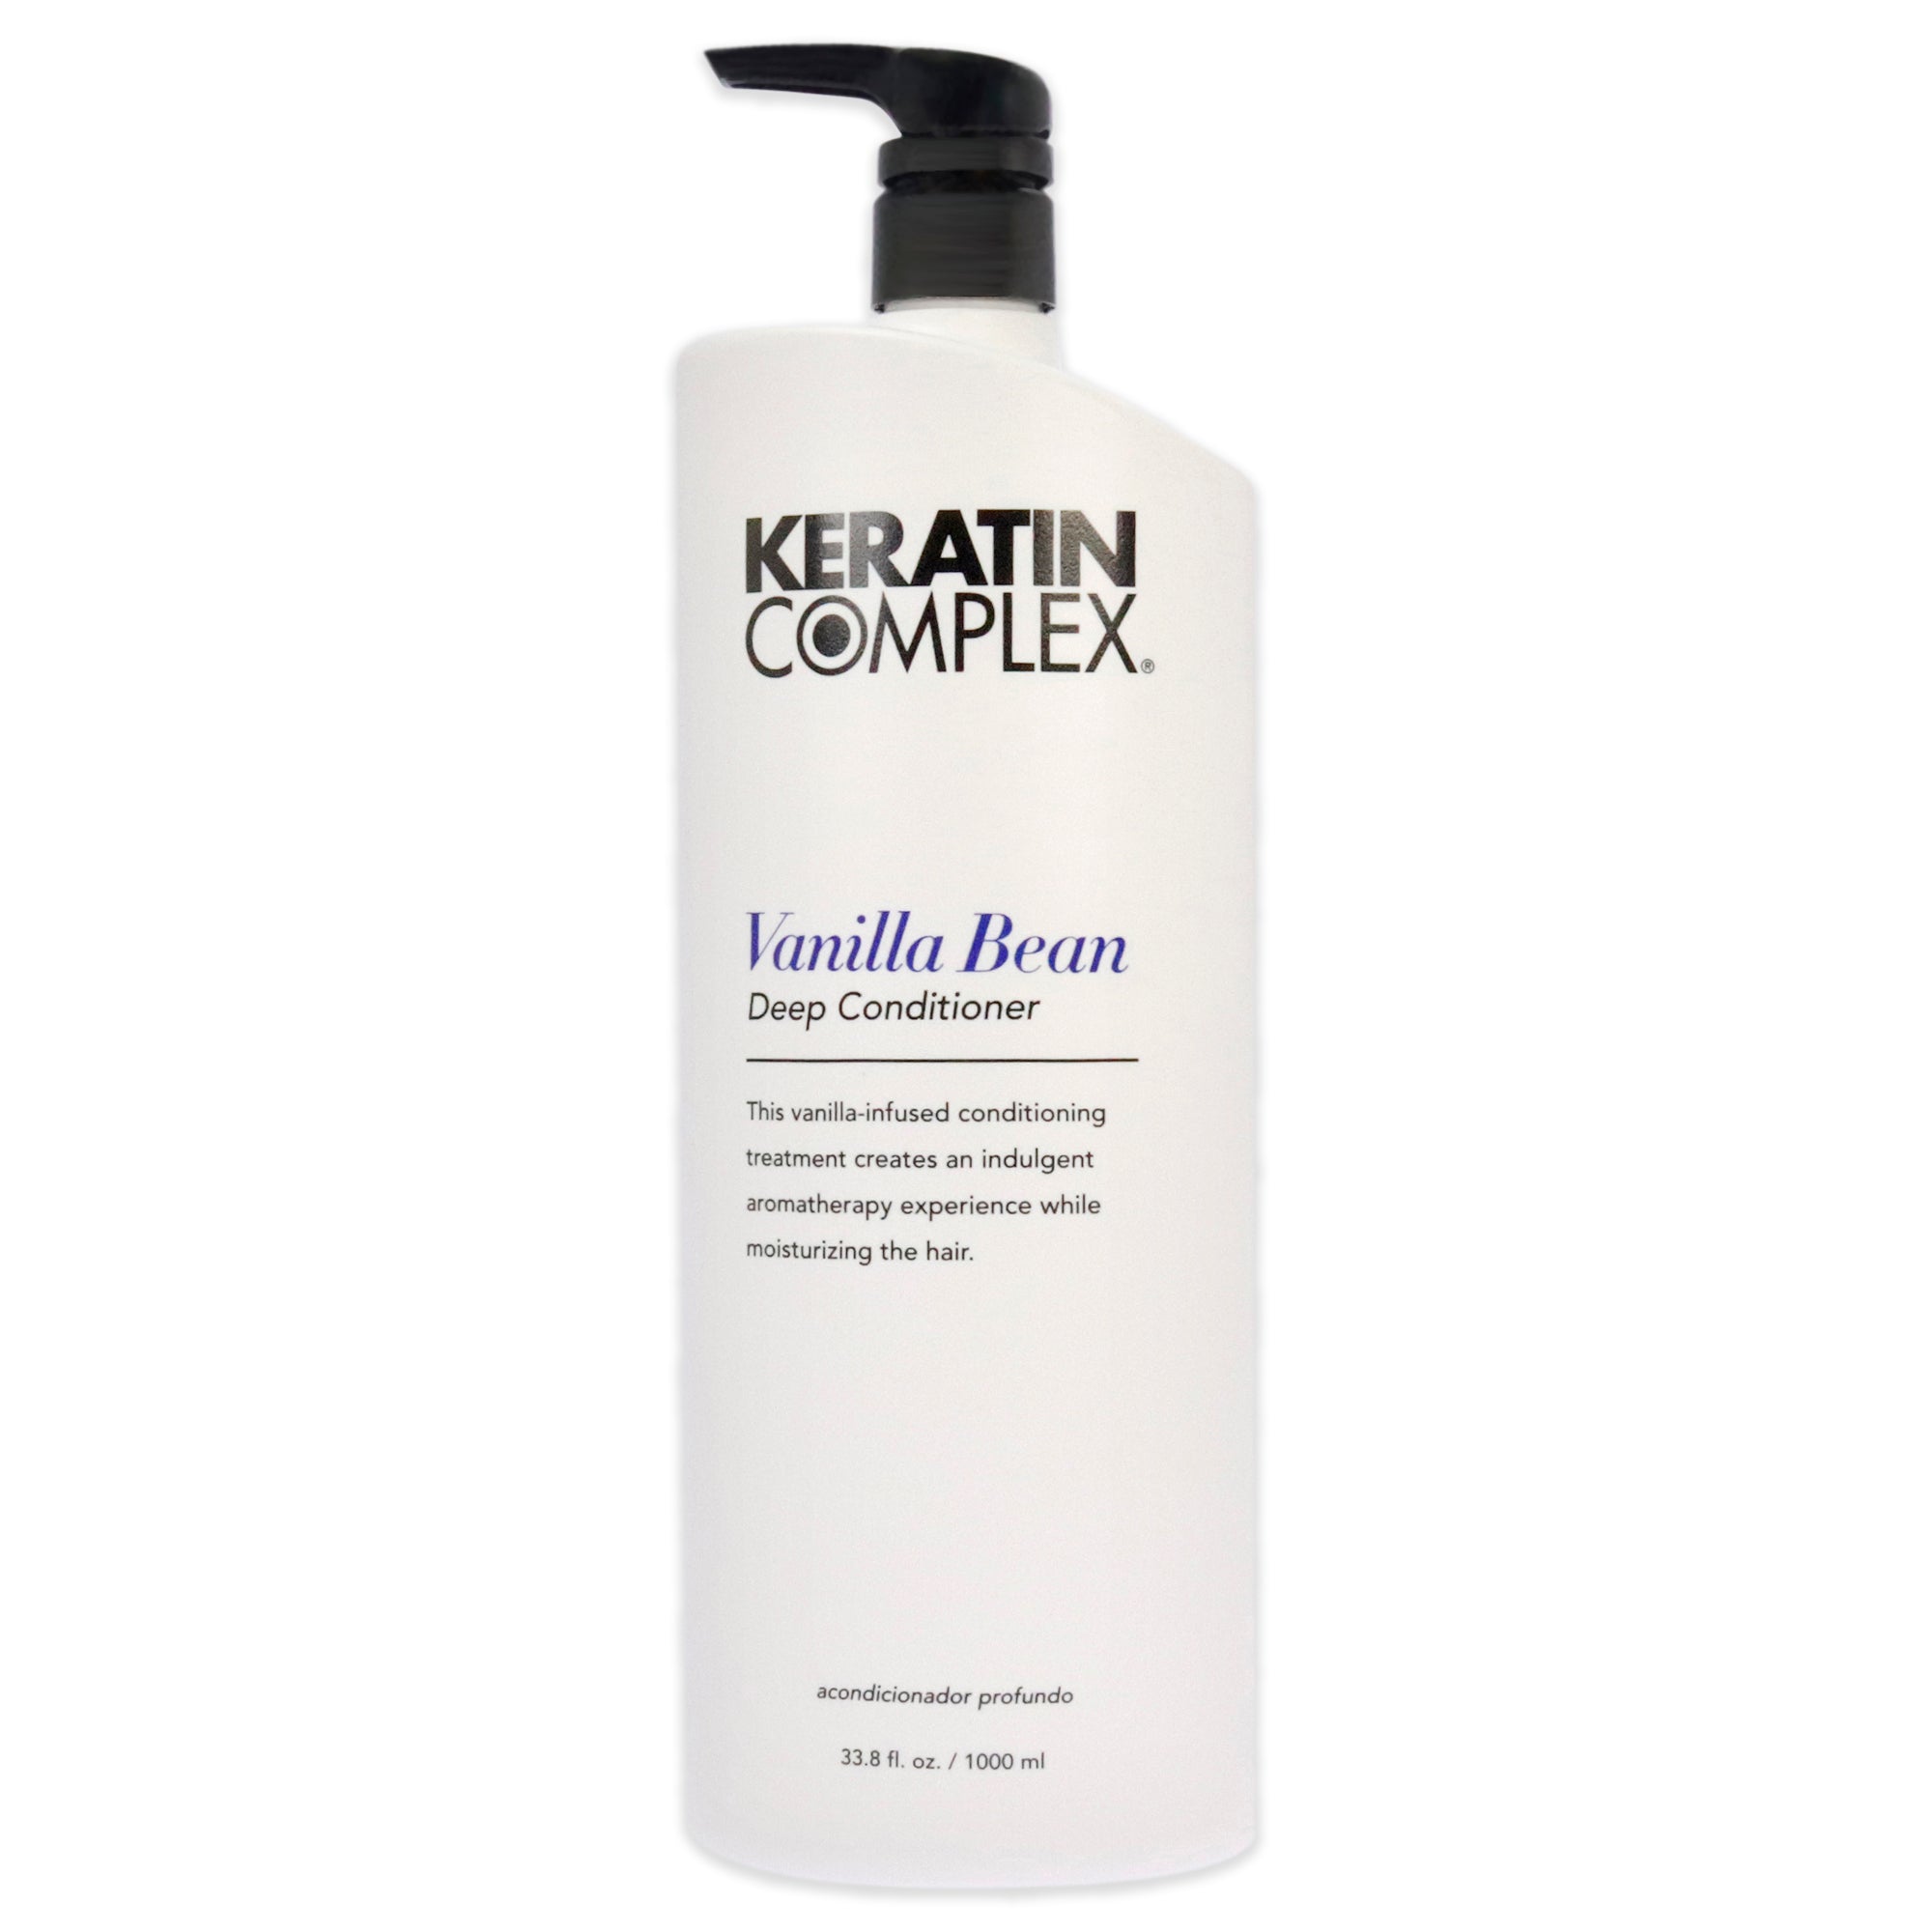 Keratin Complex Vanilla Bean Deep Conditioner by Keratin Complex for Unisex 33.8 oz Conditioner